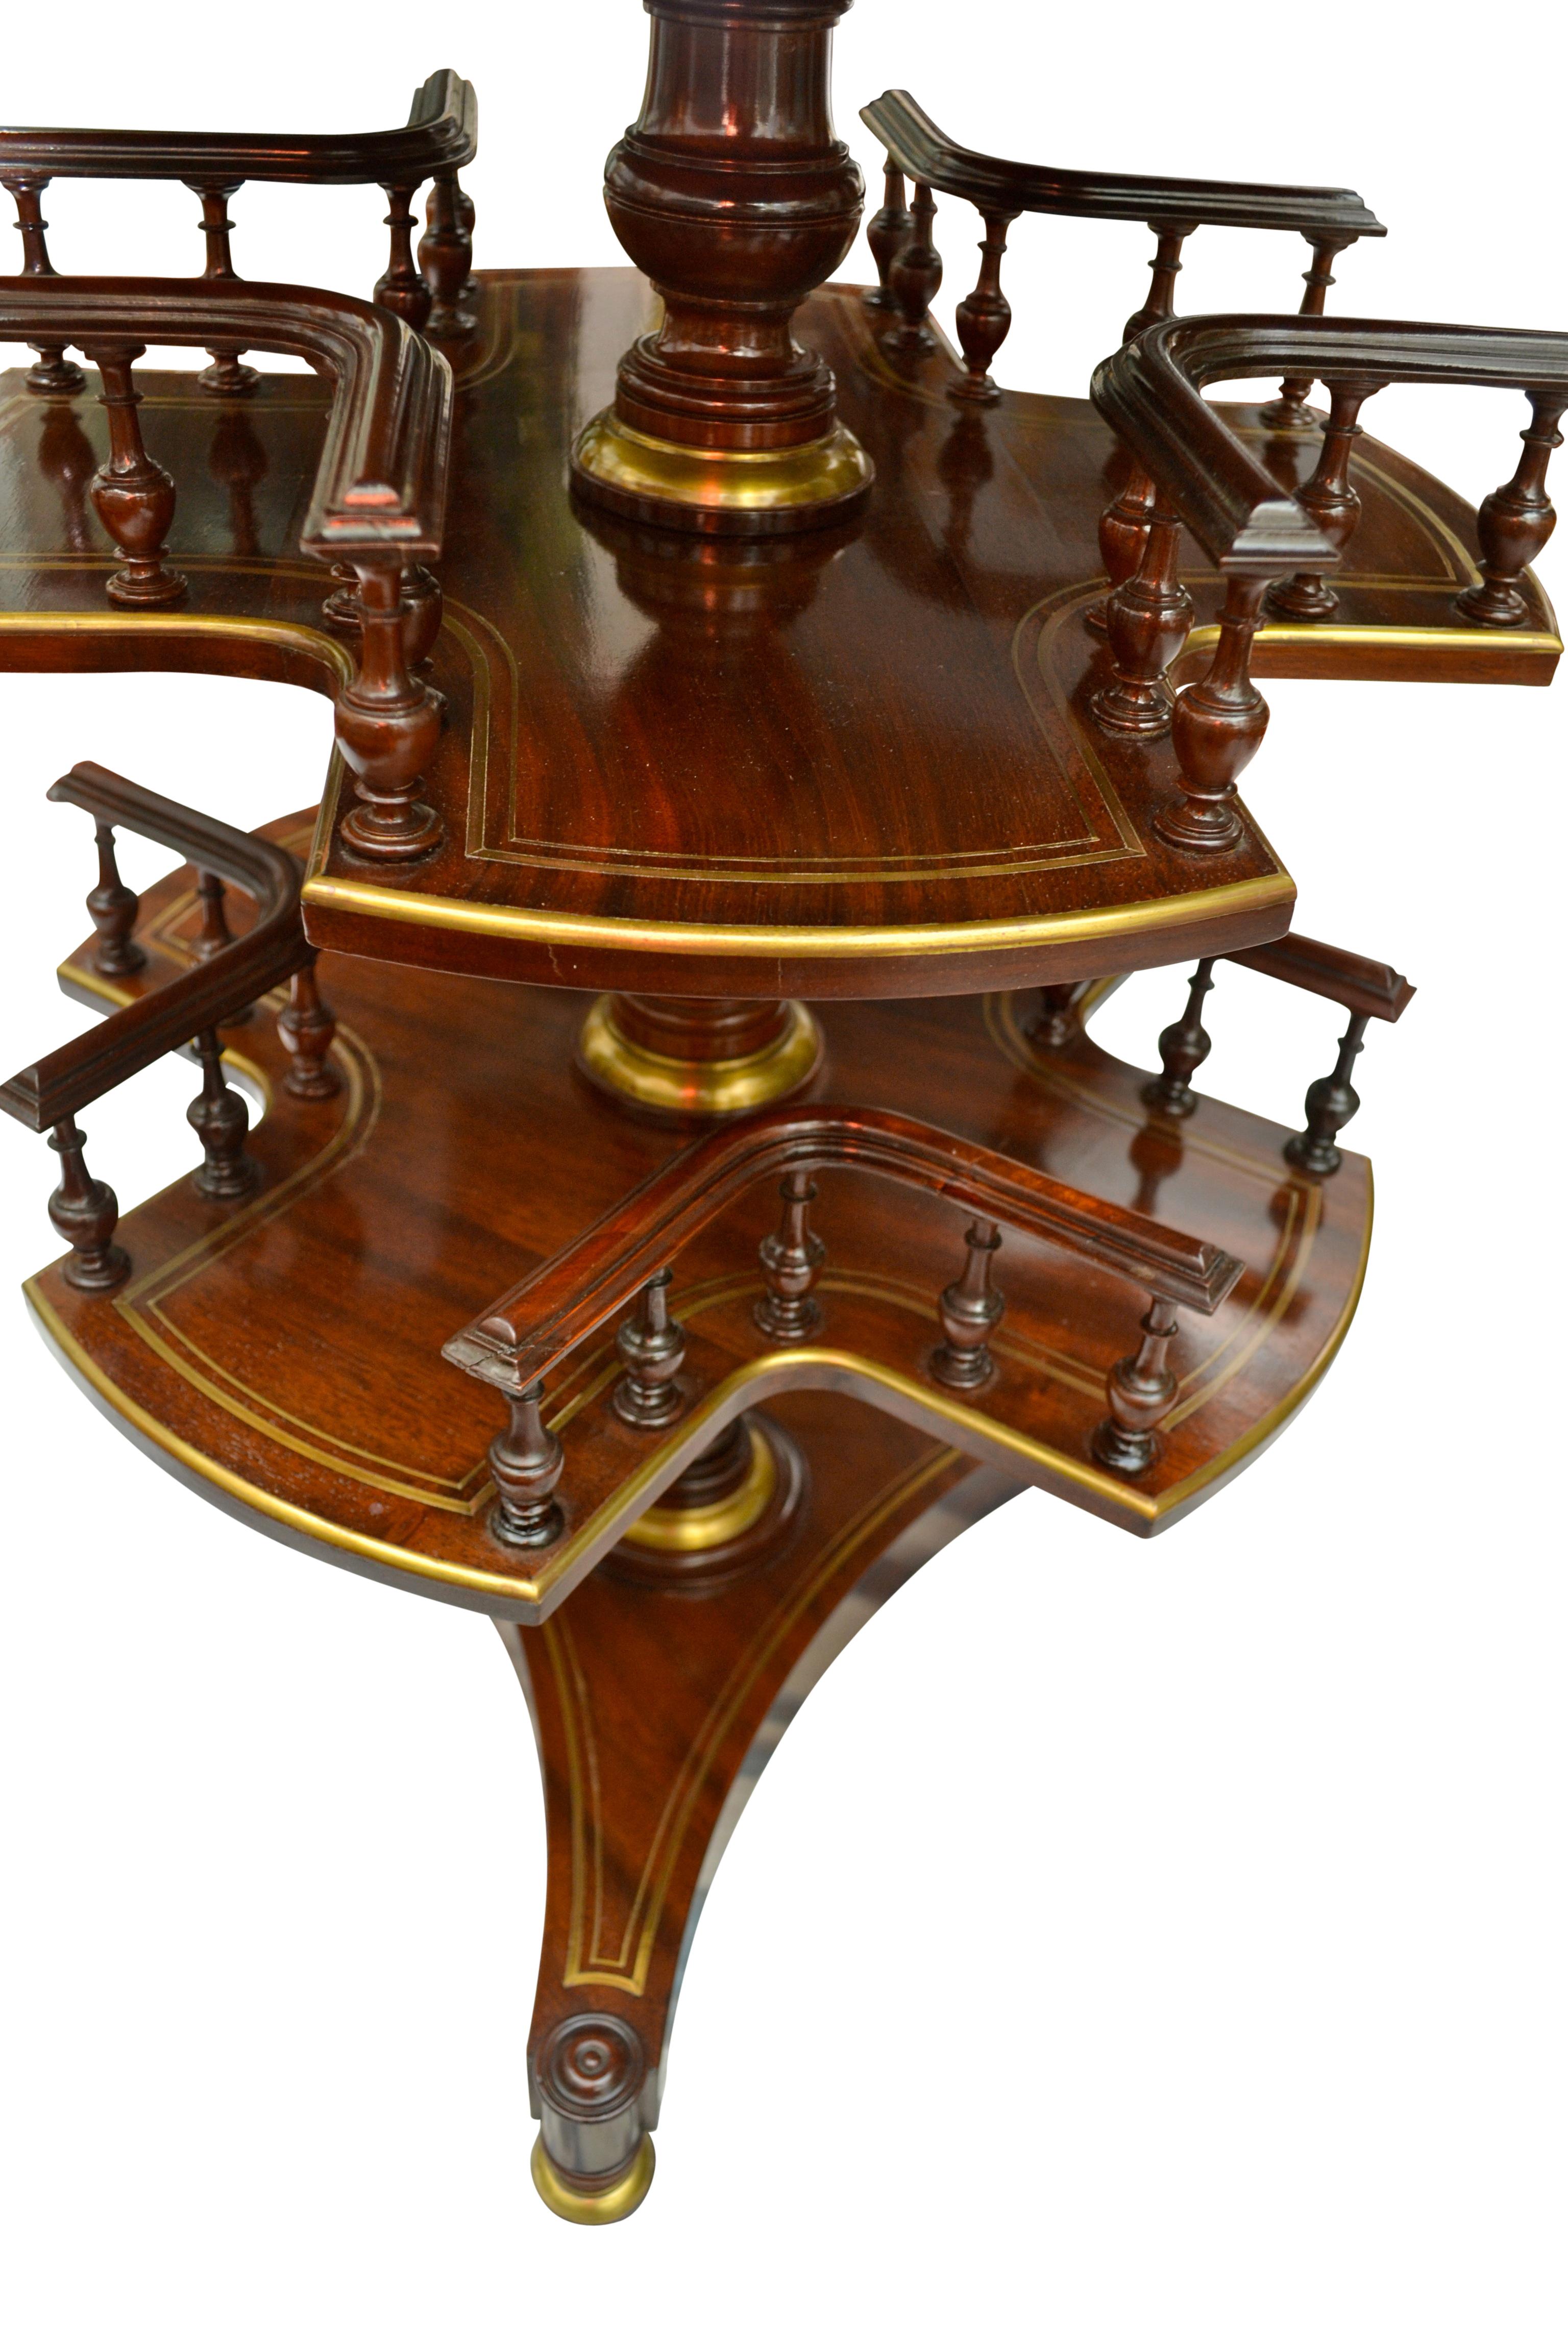 Anglais table carrousel anglaise de style Regency du 19e siècle en vente